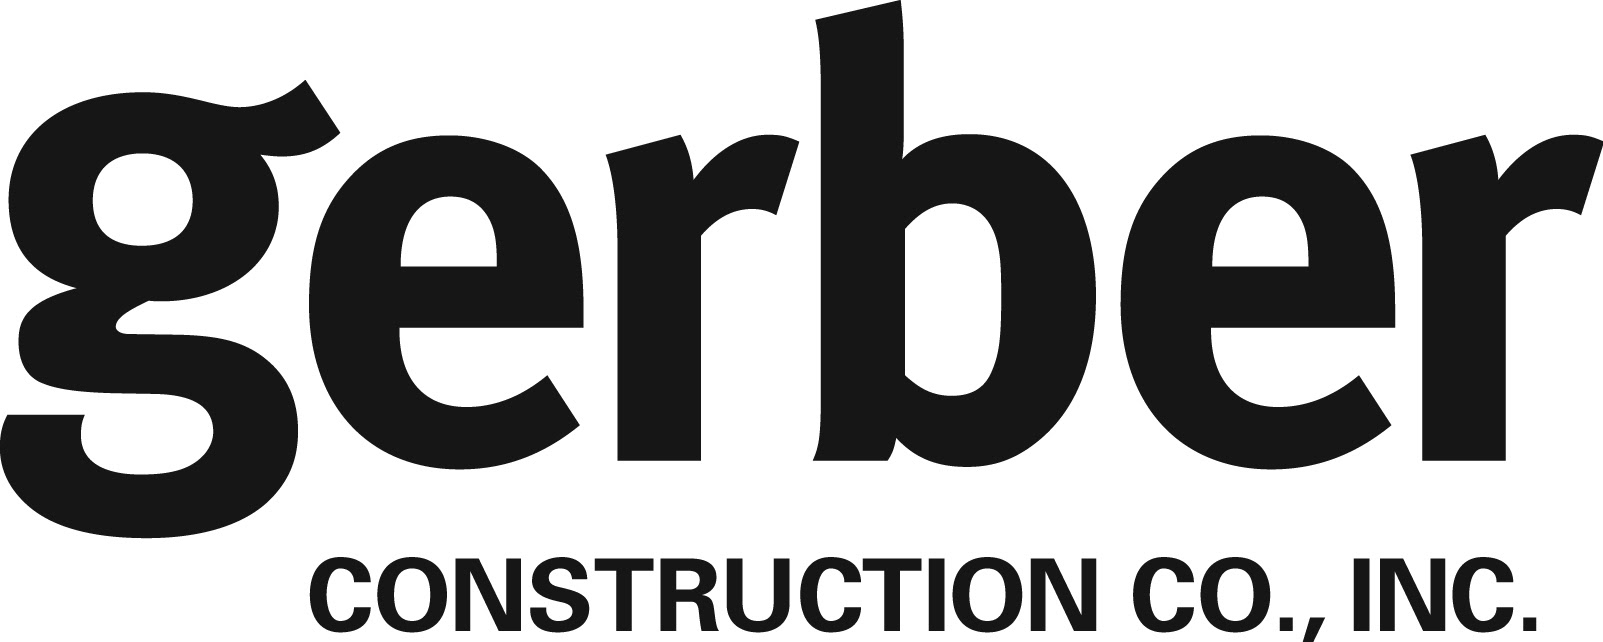 Gerber Construction Co 20270 W, US-10, Reed City Michigan 49677